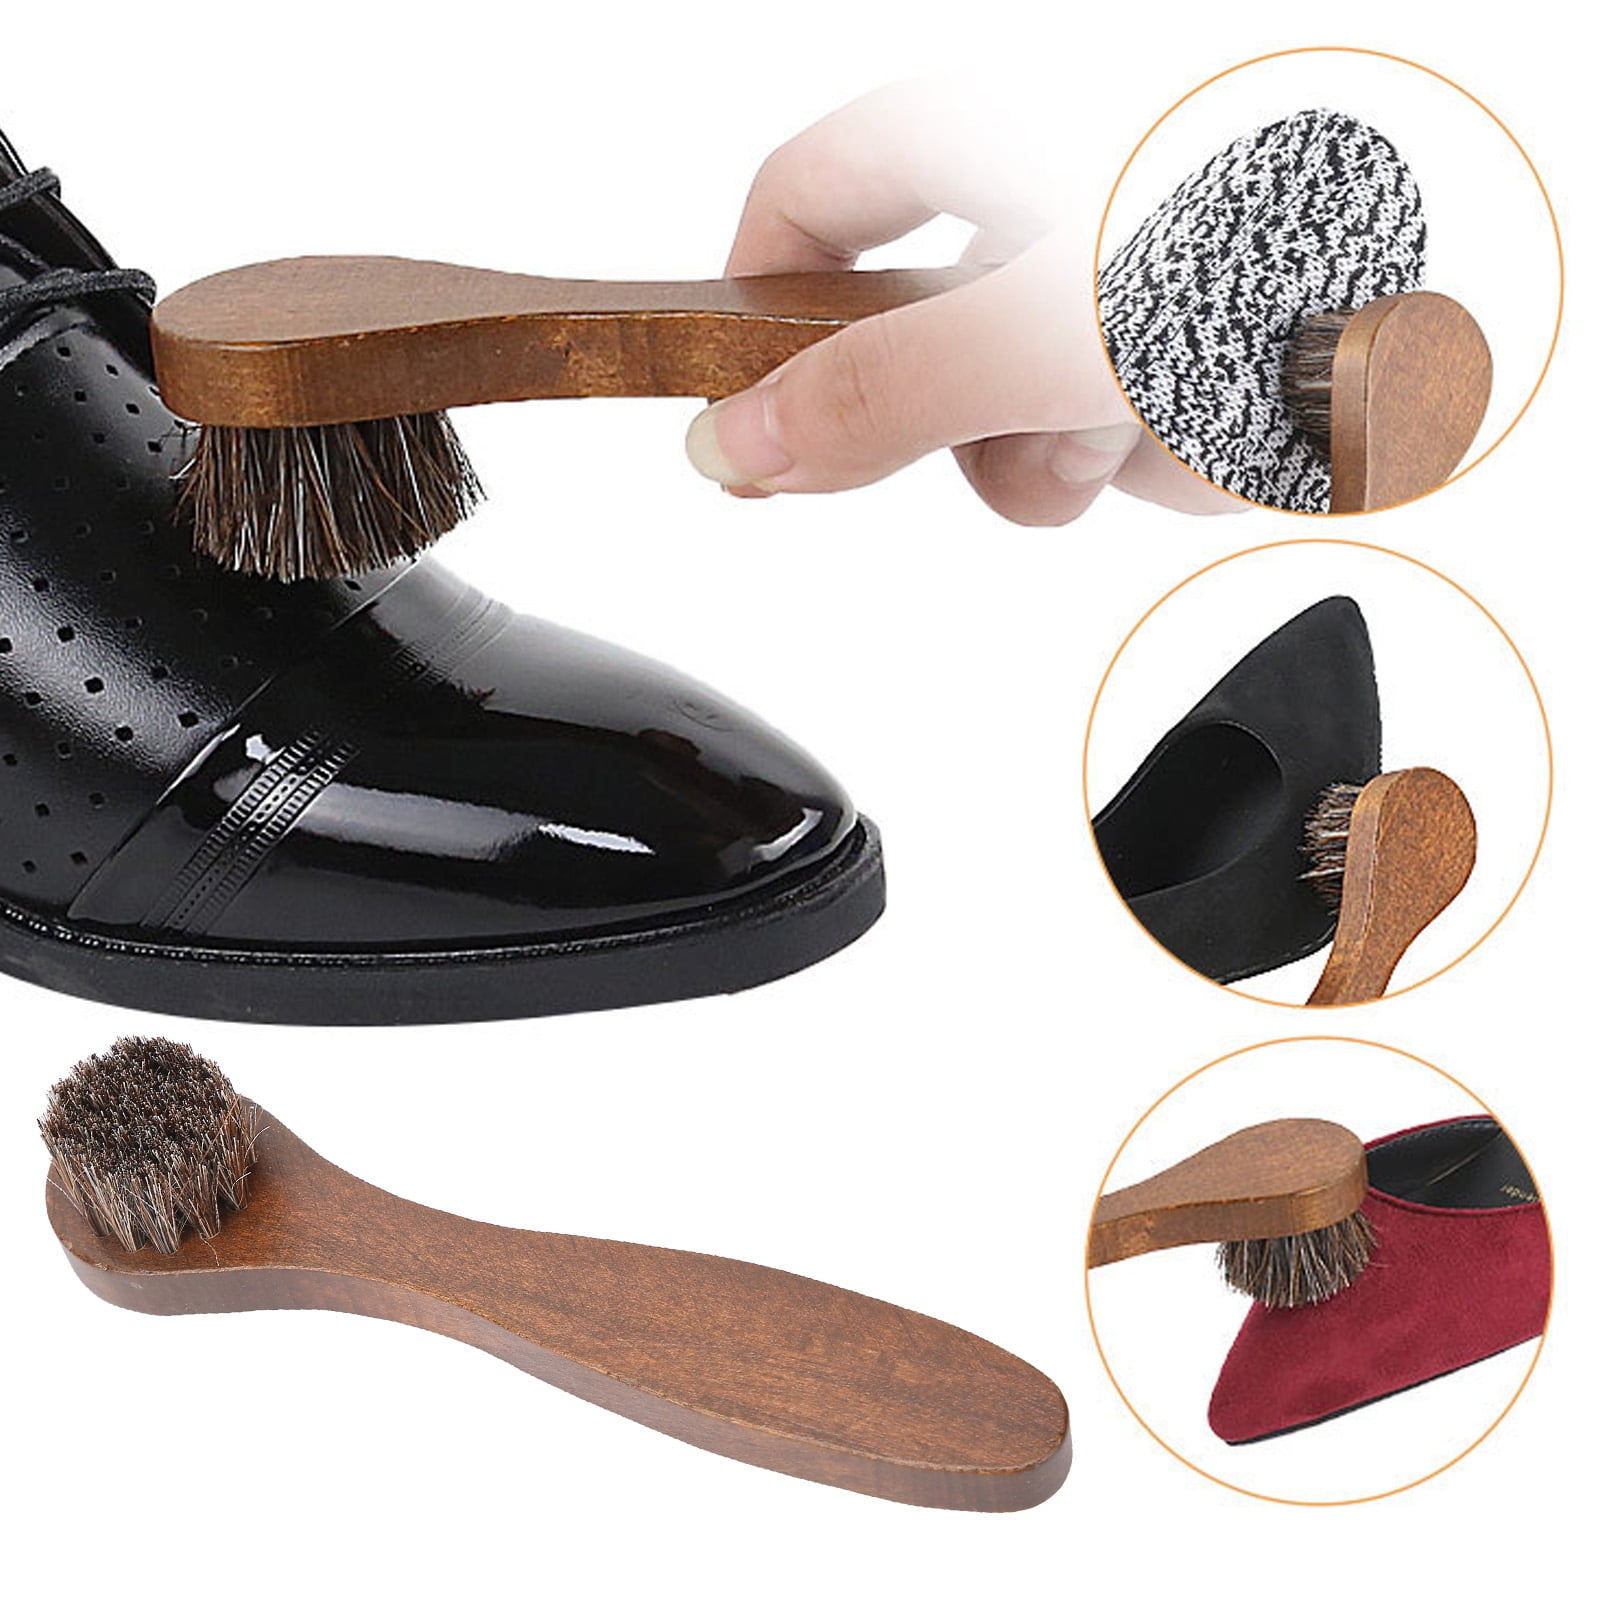 ESTINK Shoes Polish Applicator Brush,Horsehair Shine Shoes Brush